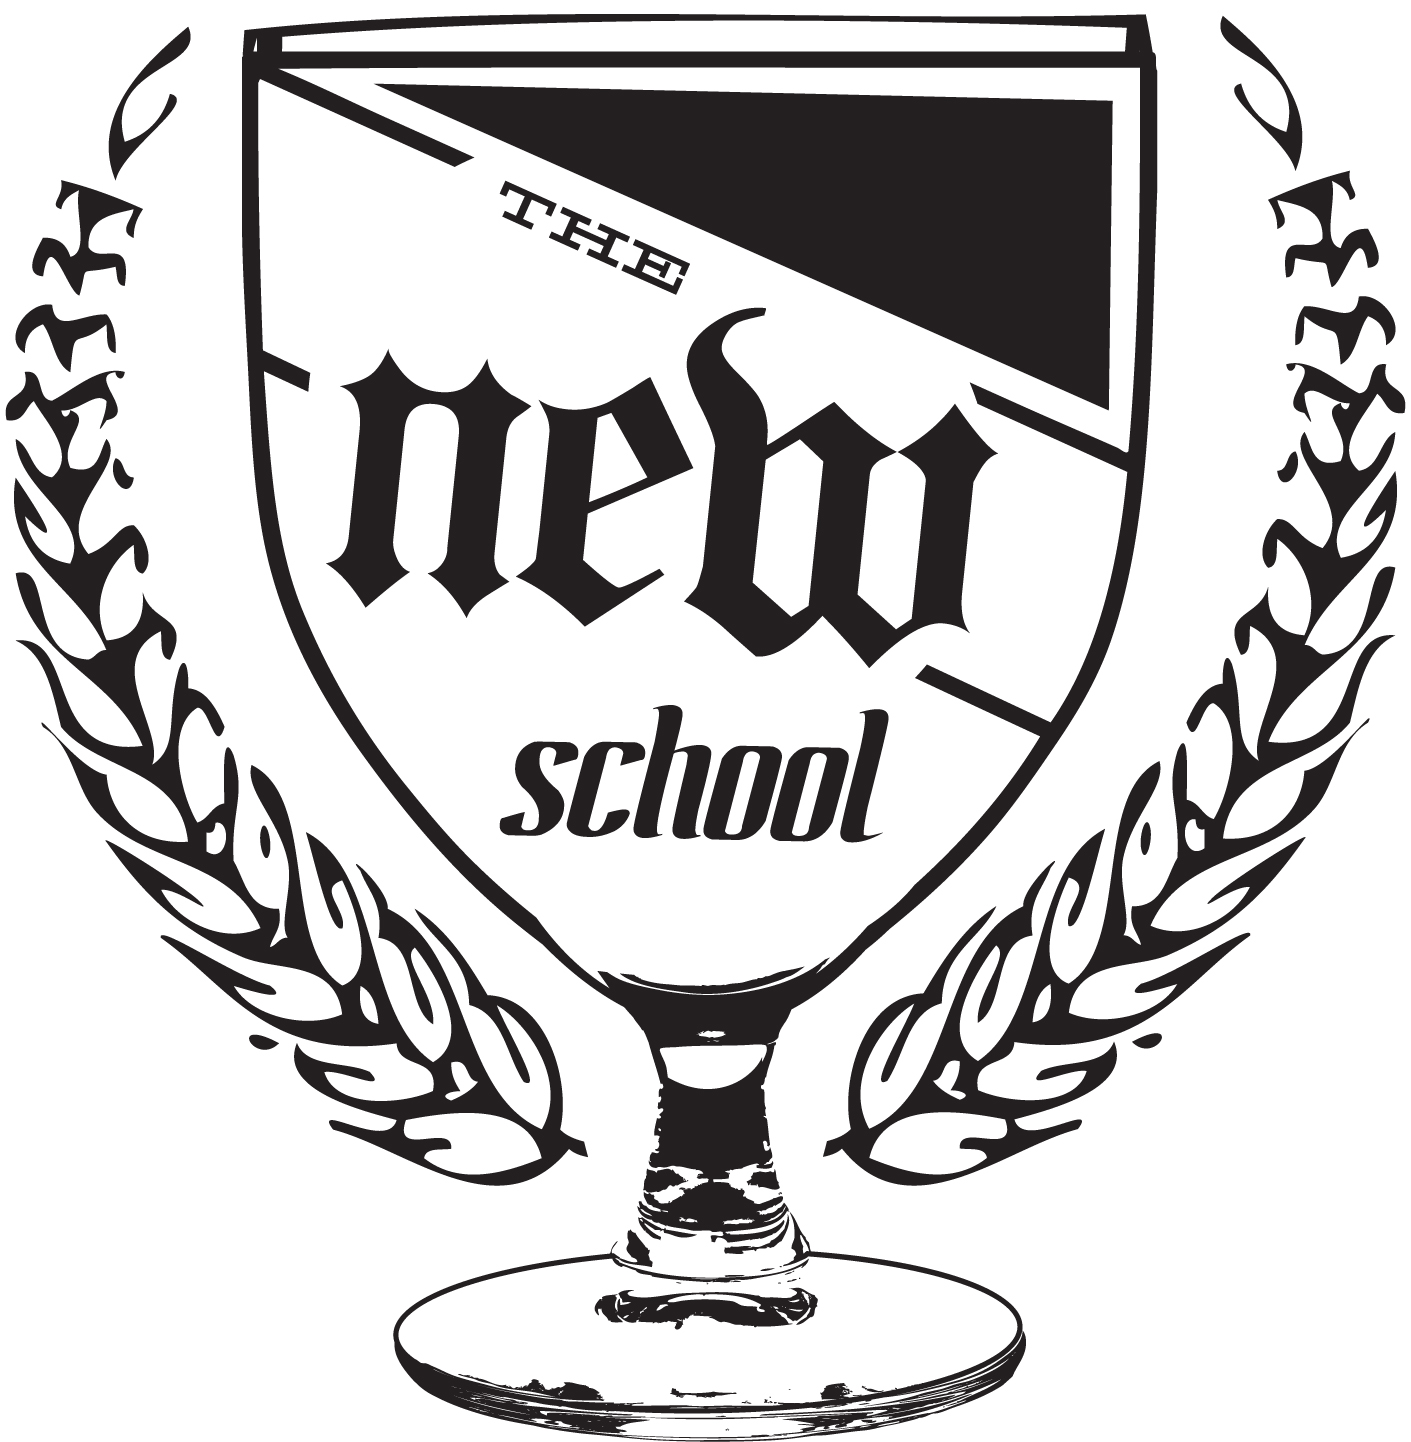 the-new-school-symbol-logo-crest